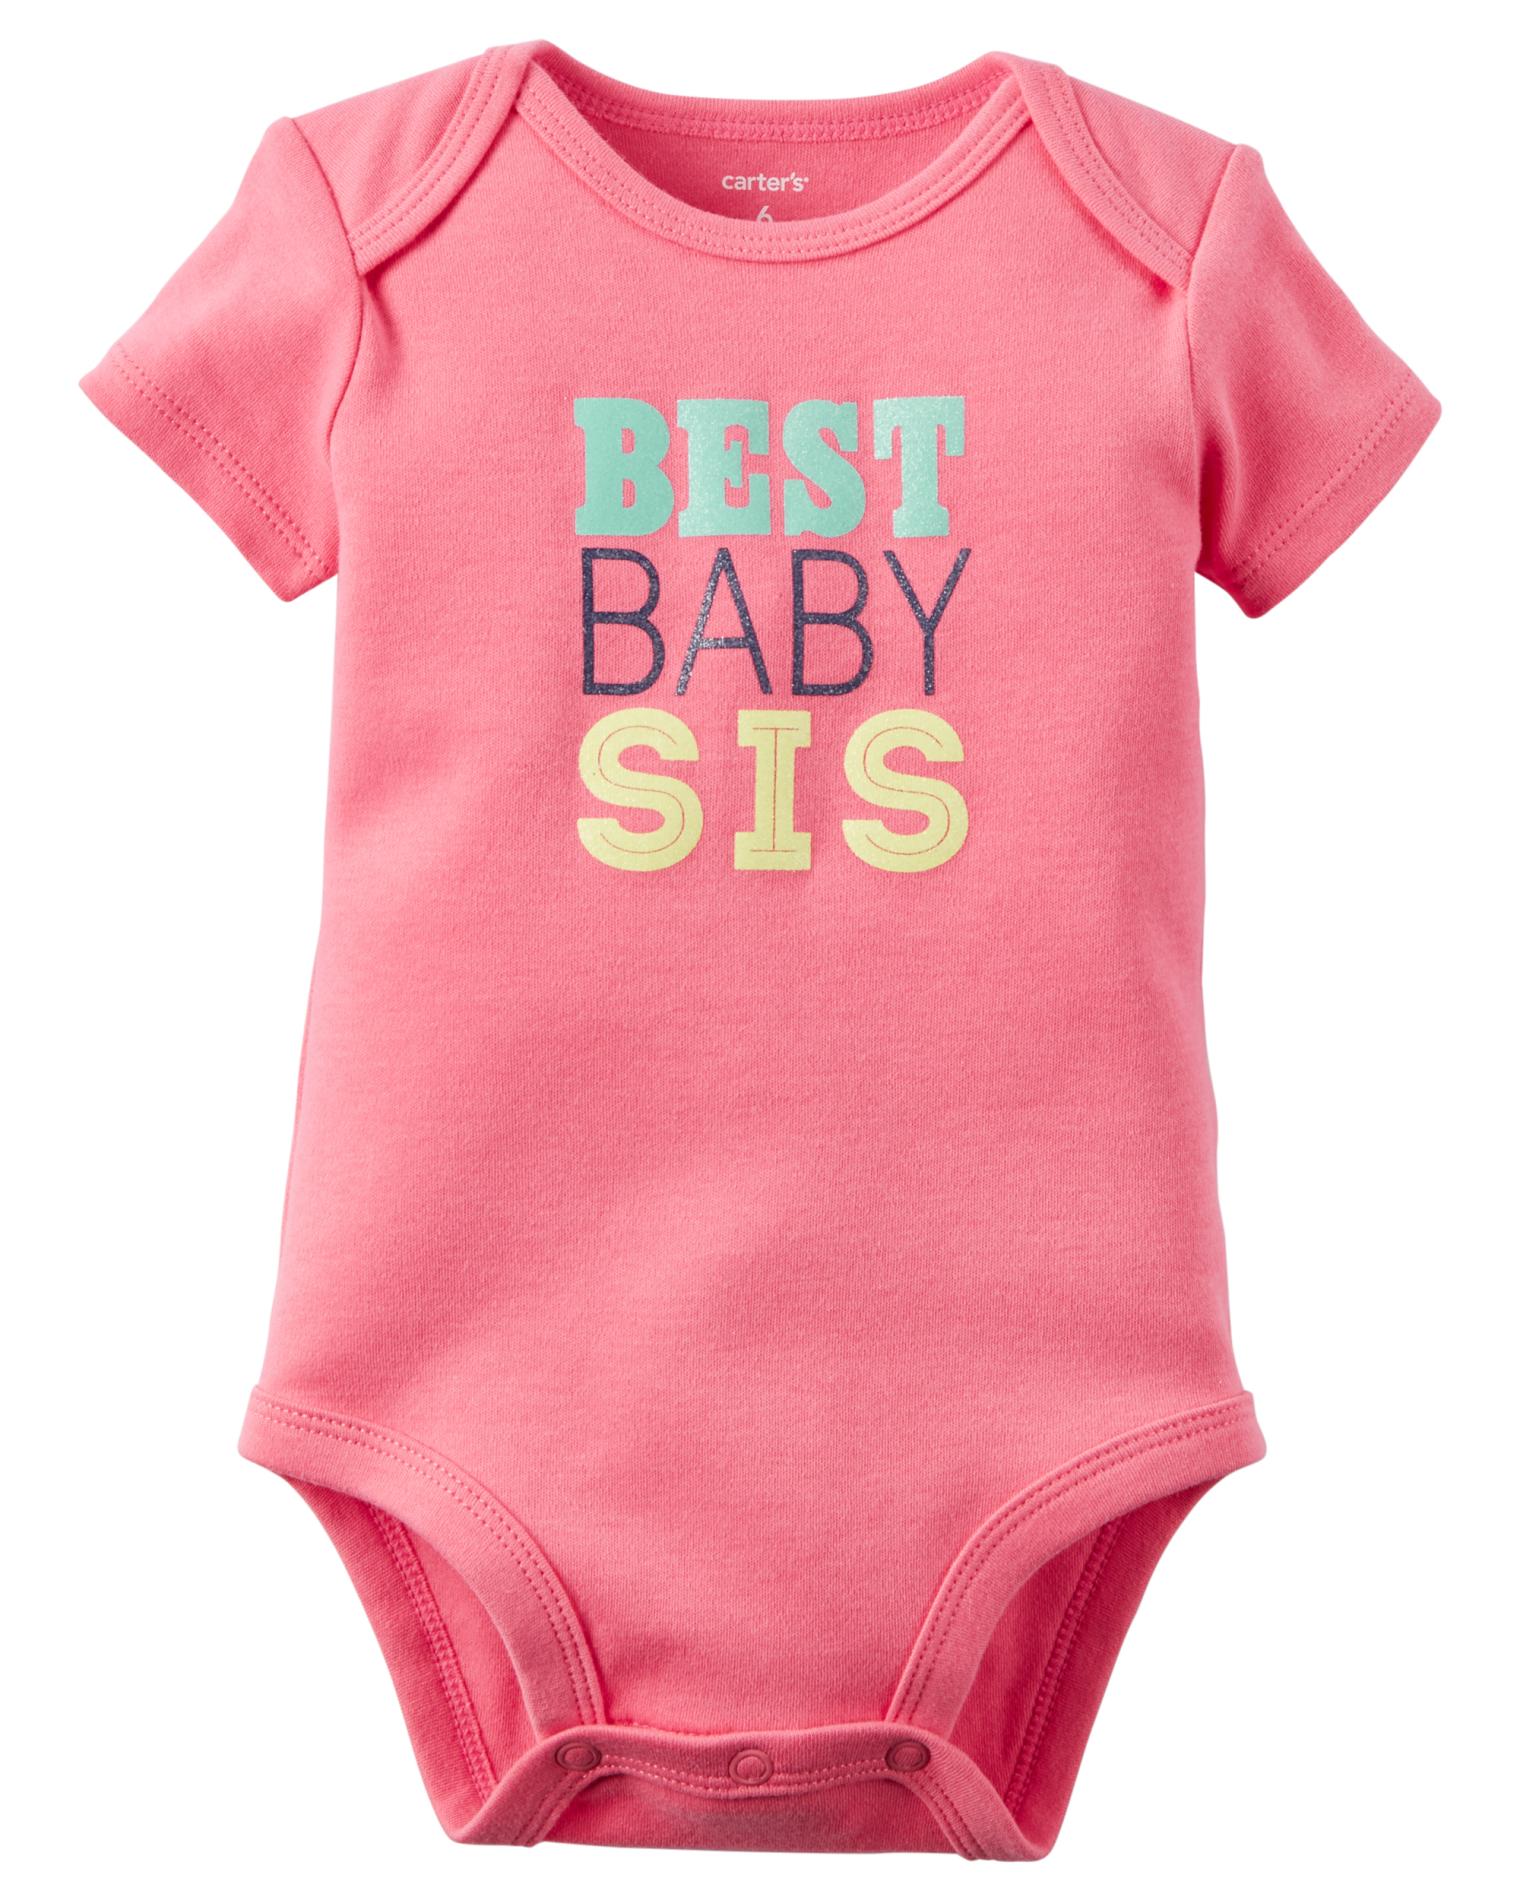 Carter's Newborn & Infant Girls' Graphic Bodysuit - Best Baby Sis